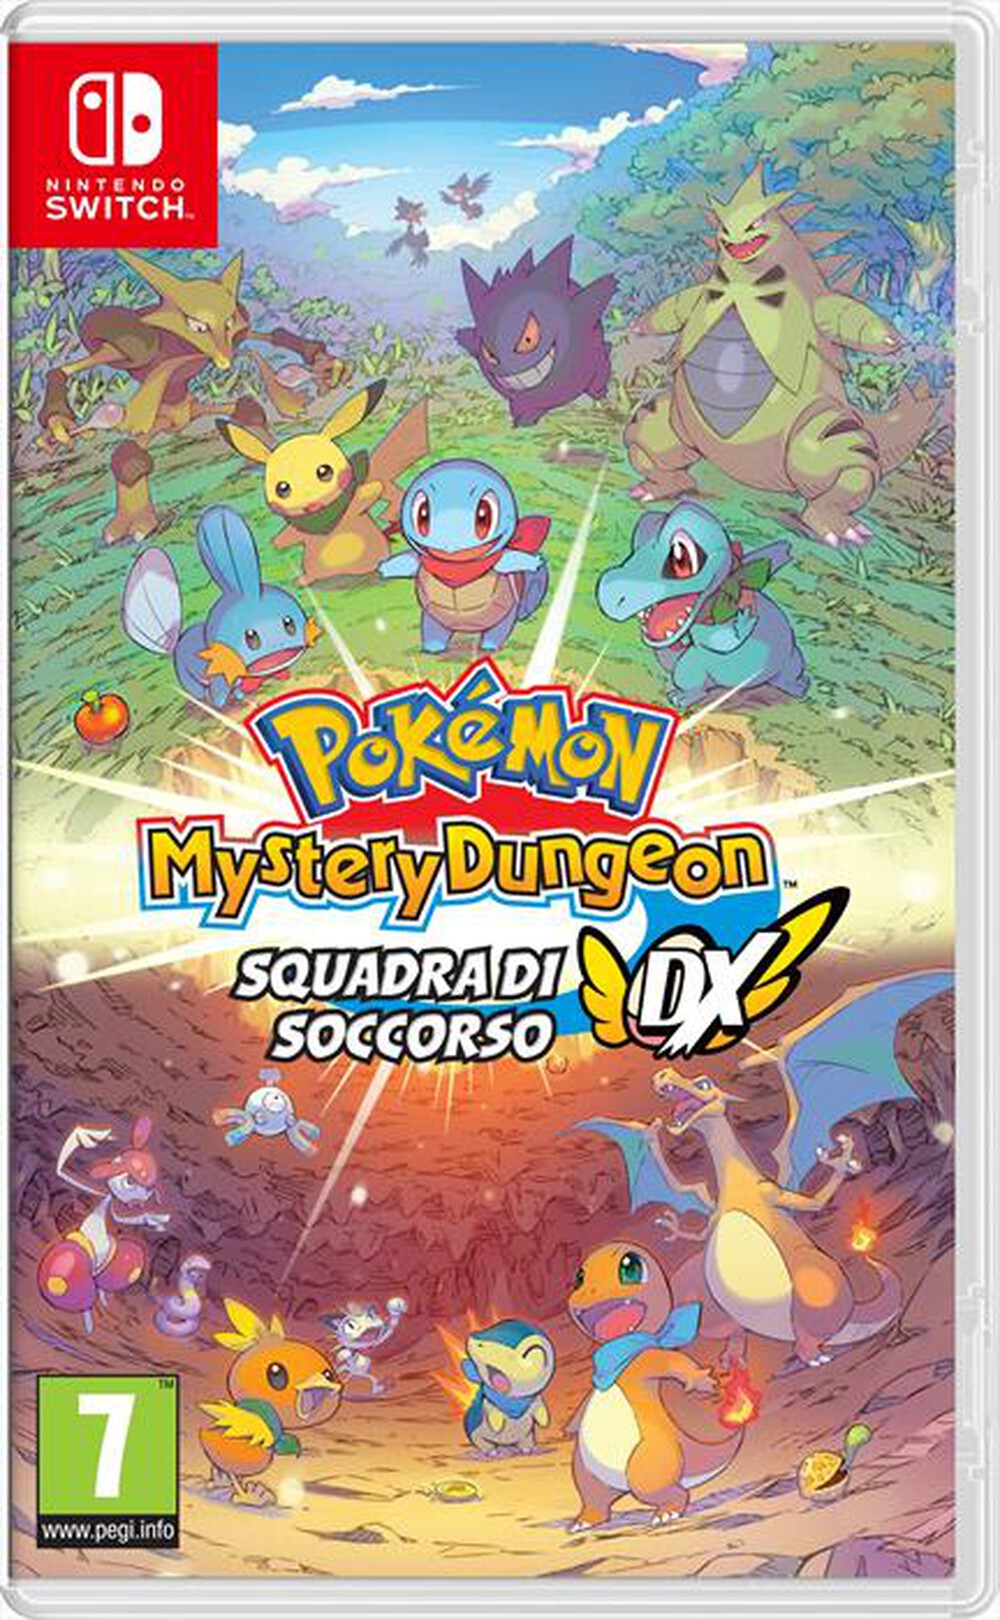 "NINTENDO - Pokémon Mystery Dungeon: Squadra di Soccorso DX"